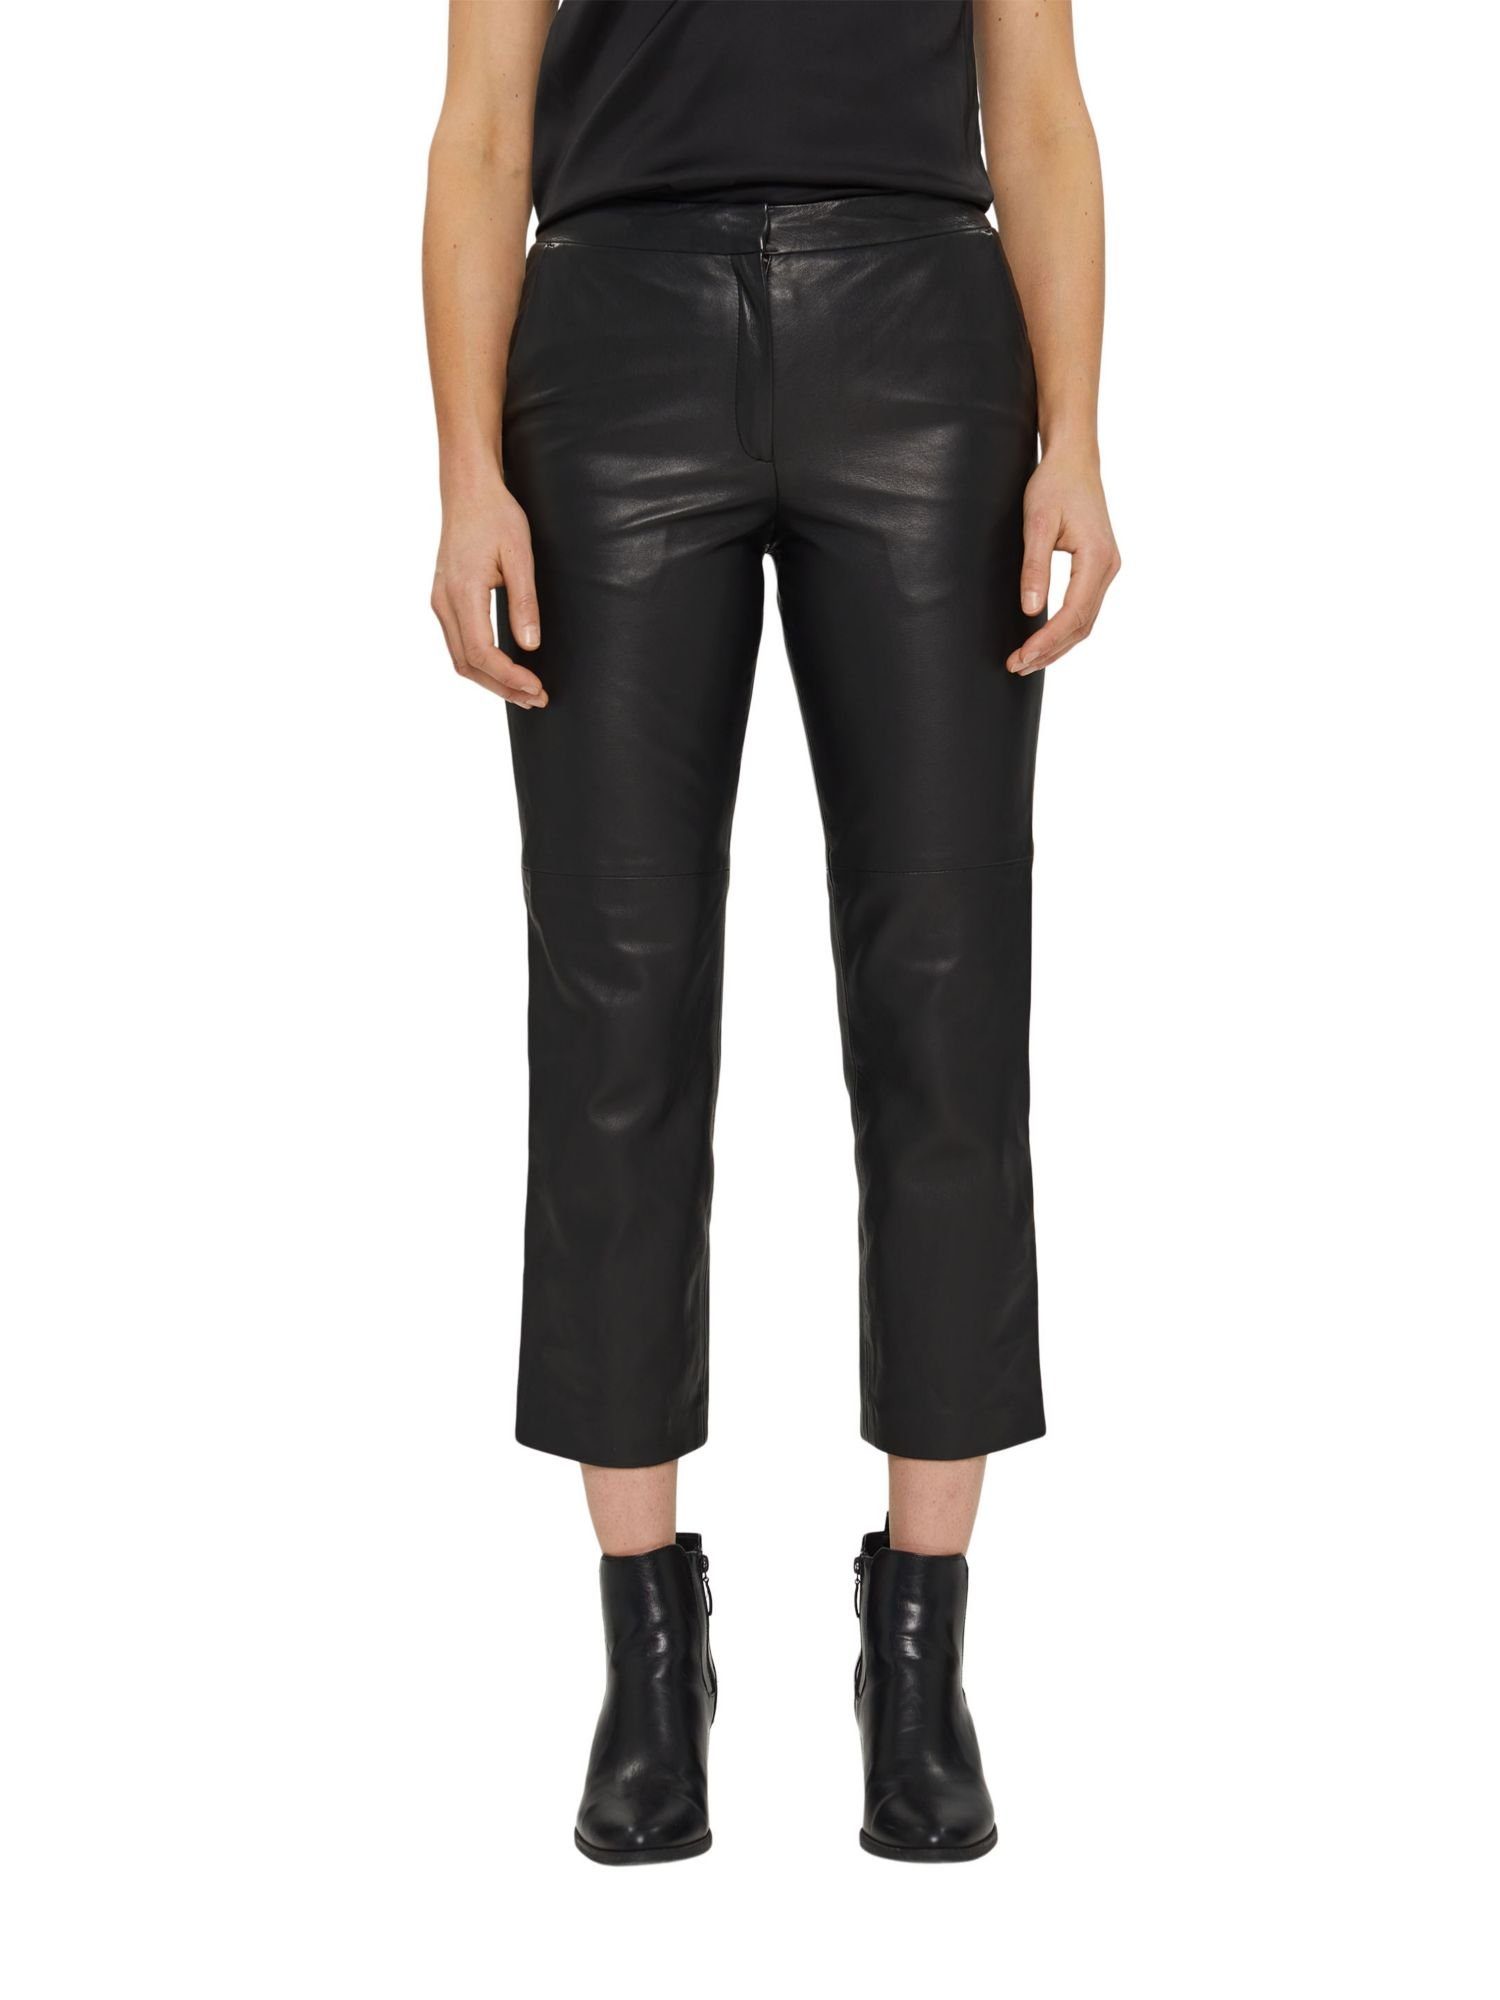 Esprit Collection Lederhose »Aus Leder: Cropped Hose« online kaufen | OTTO